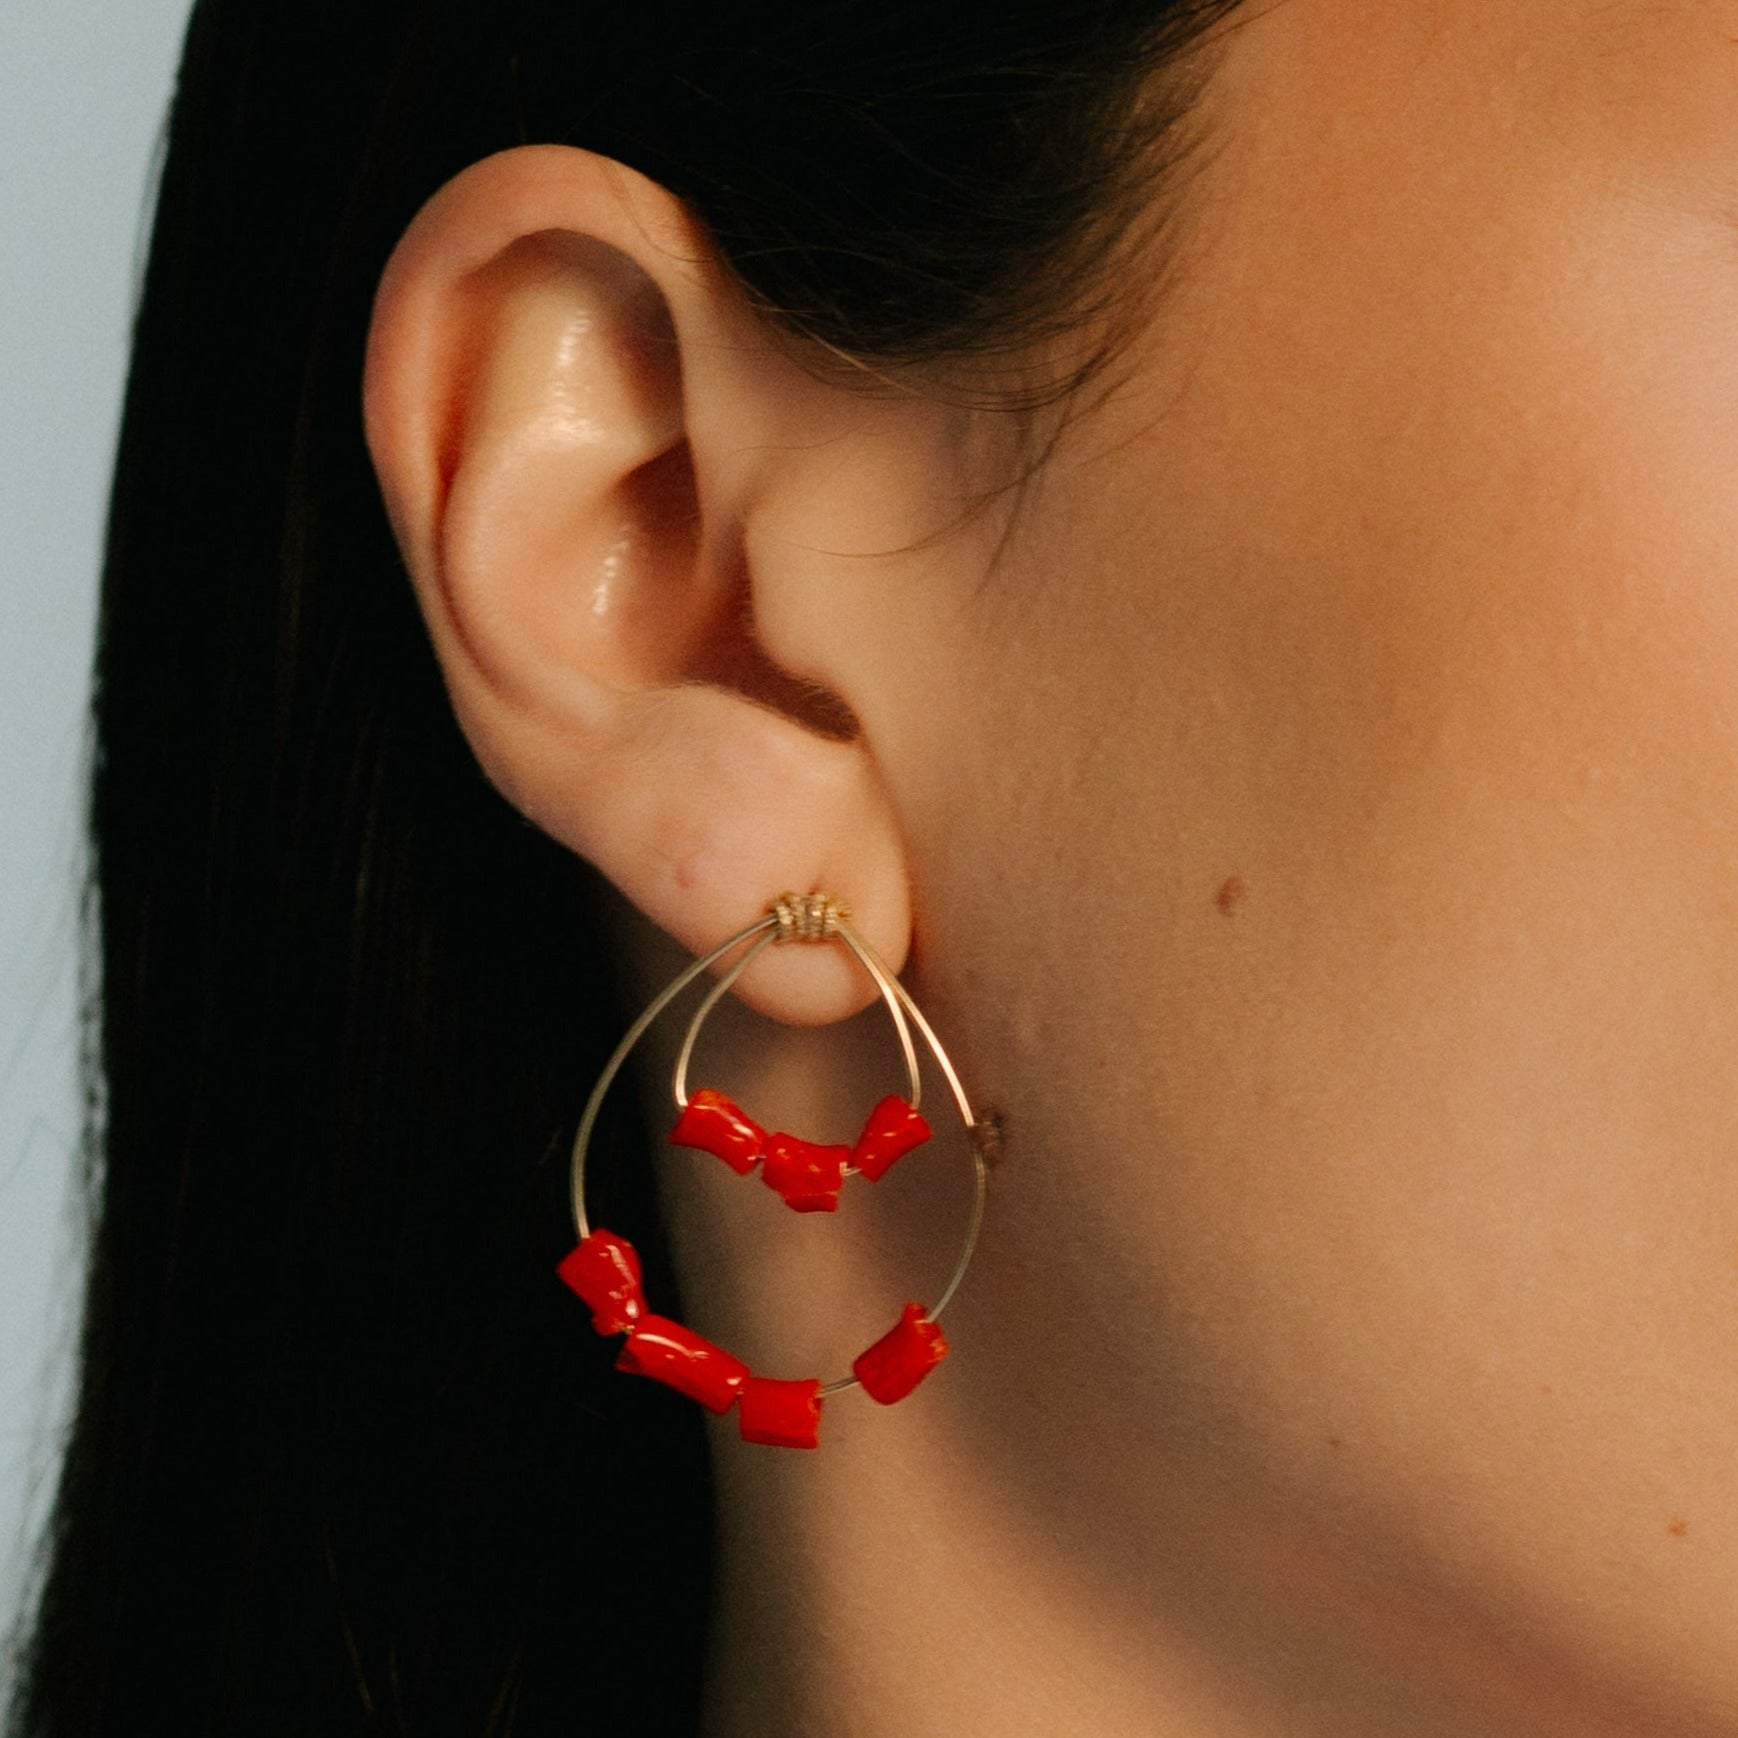 Koralli Dangle Earrings #2 (35mm) - Red Coral Earrings TARBAY   